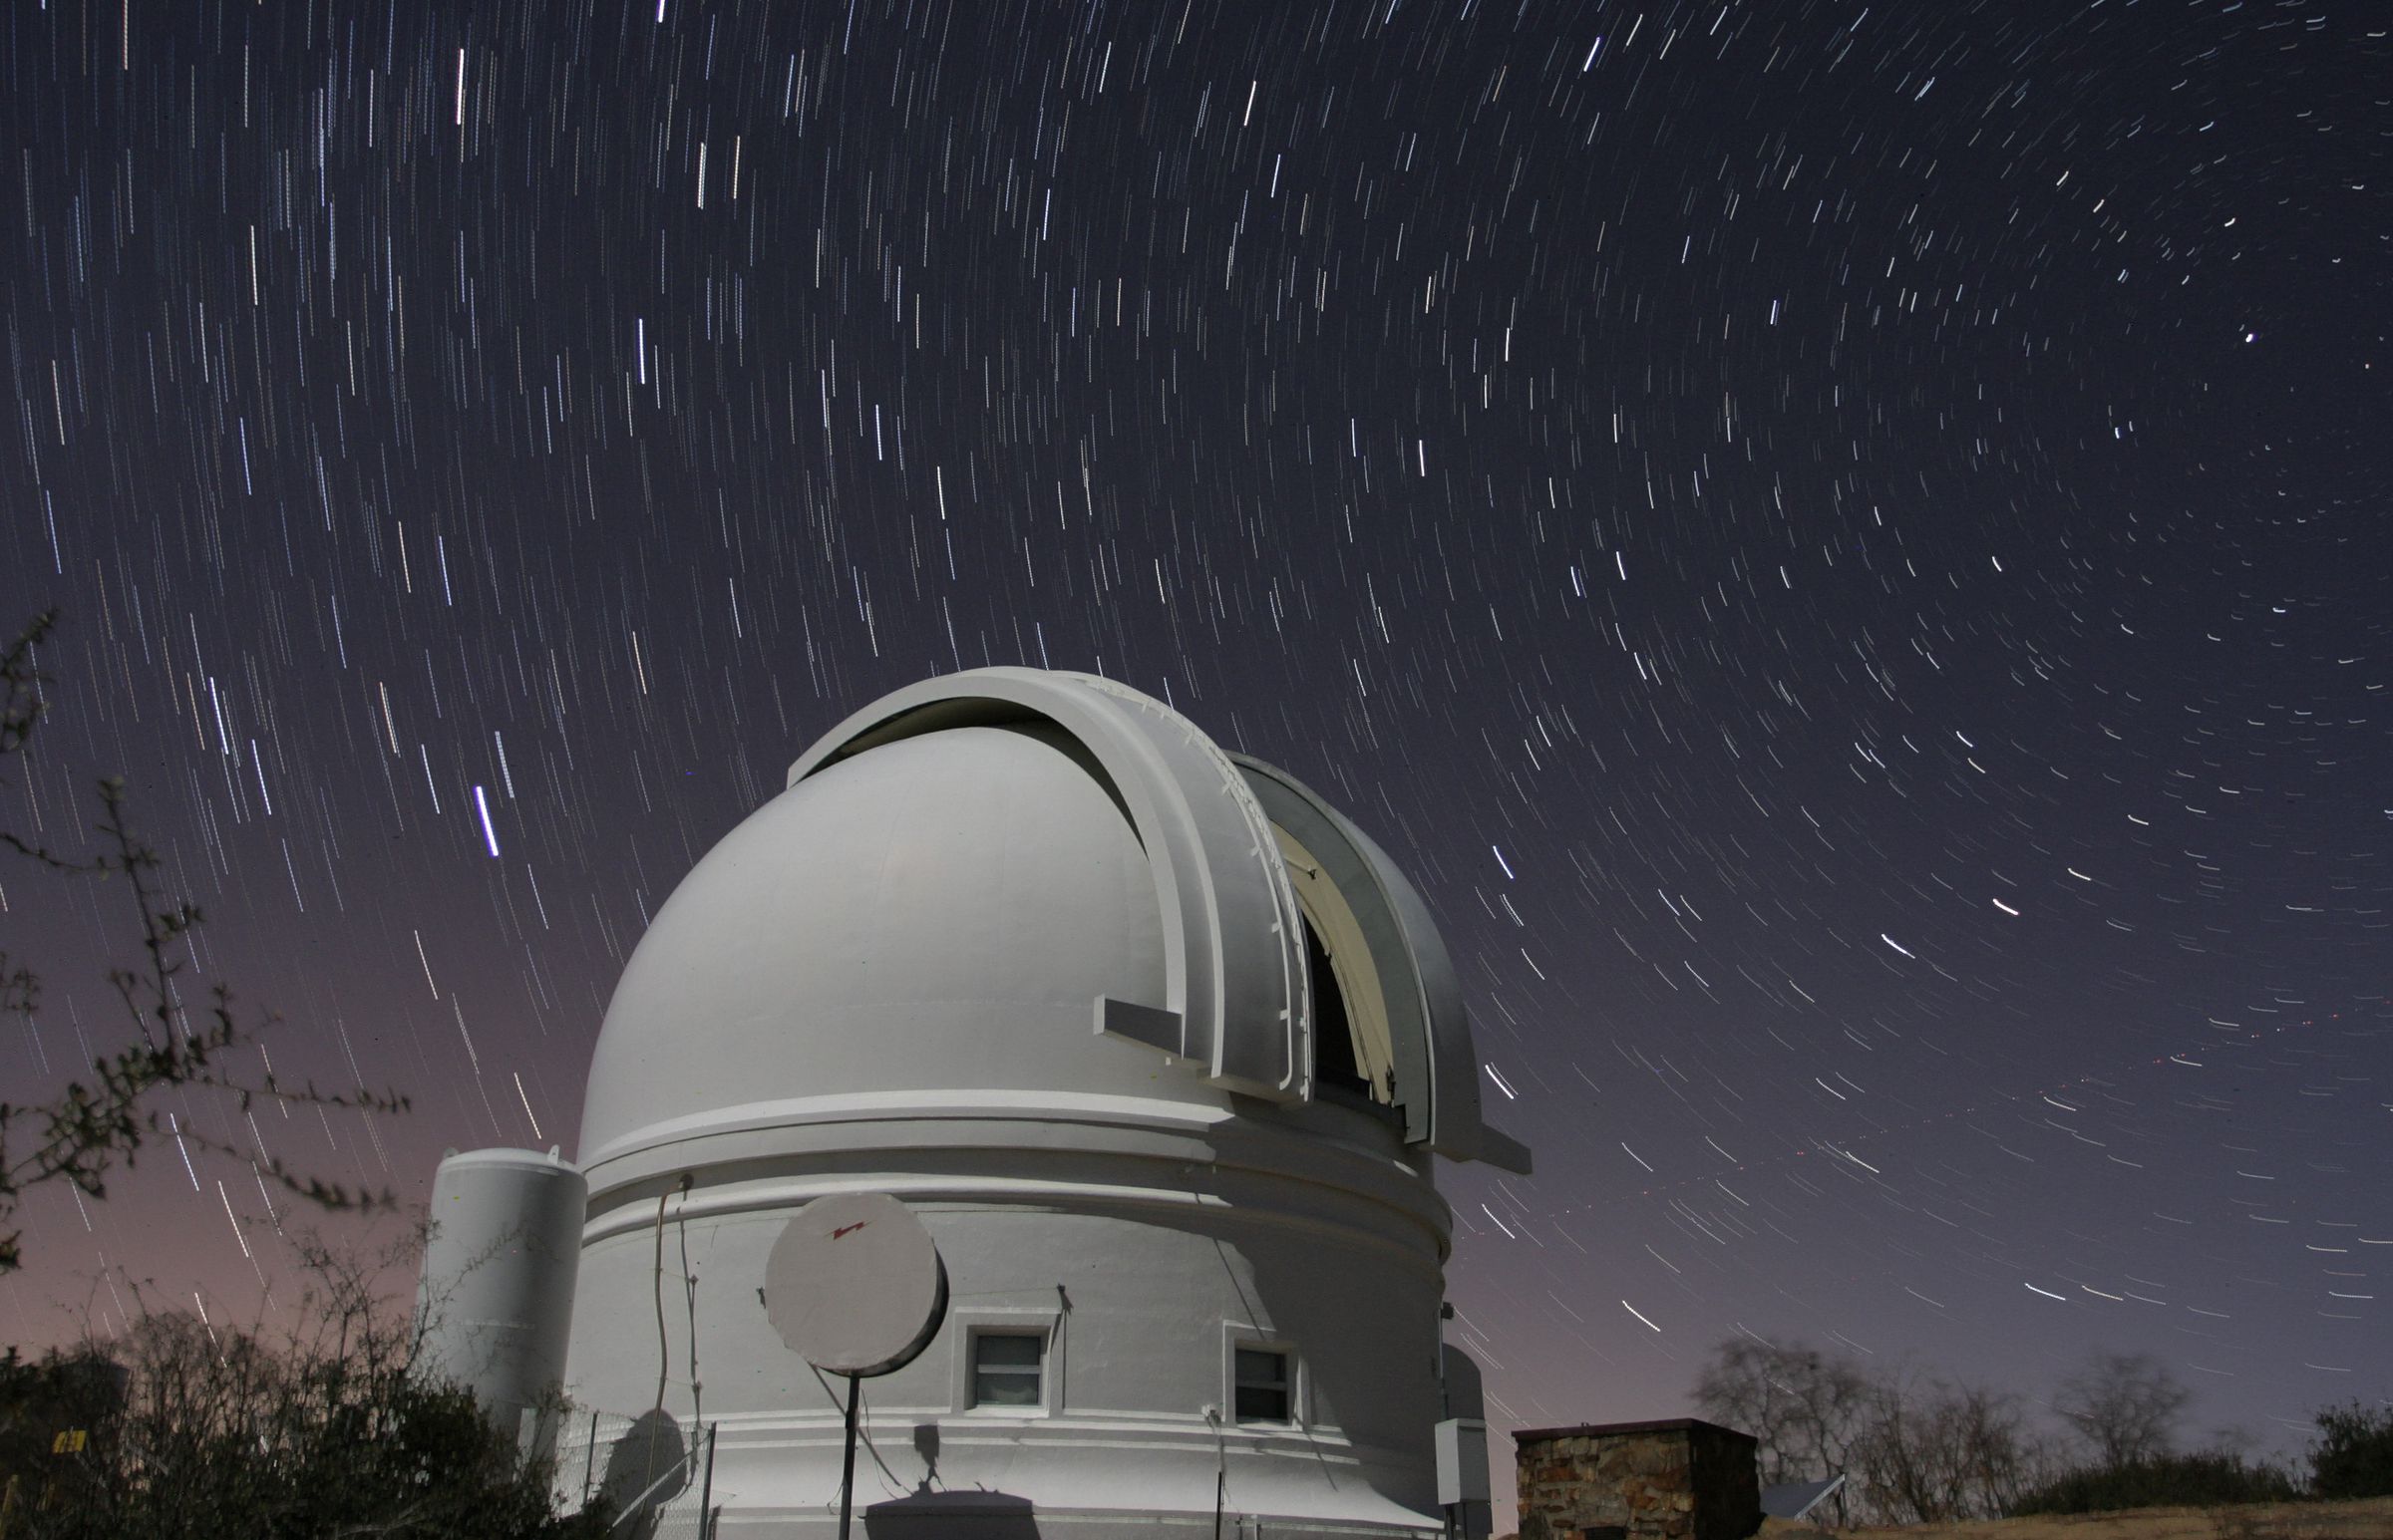 The Palomar 48-inch telescope